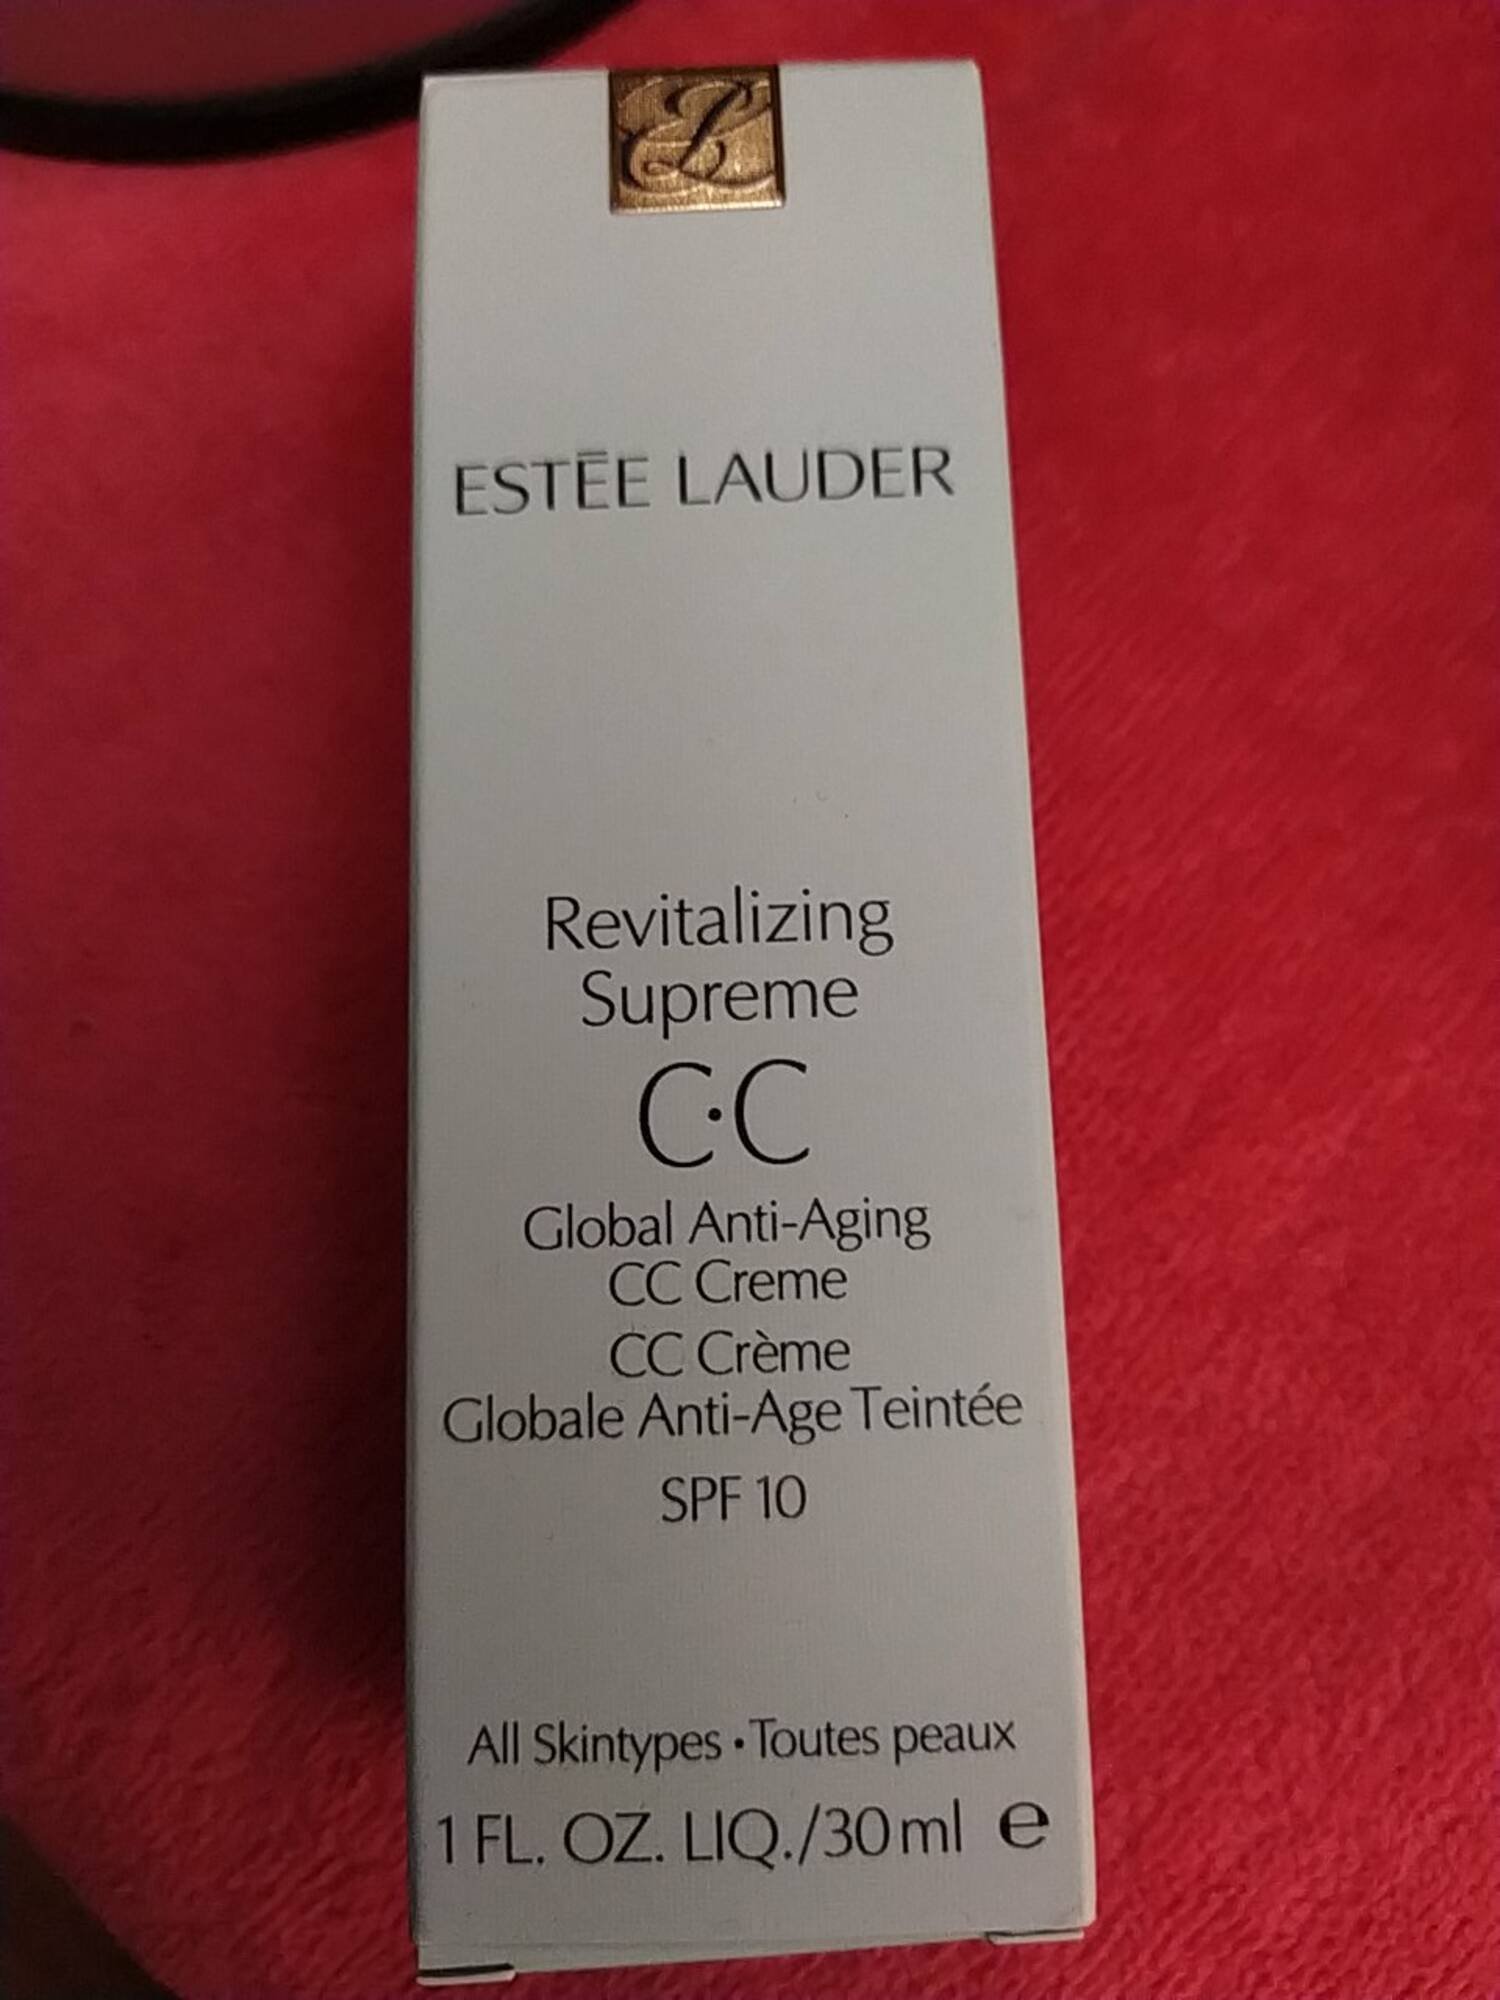 ESTEE LAUDER - Revitalizing supreme - CC global anti-aging creme